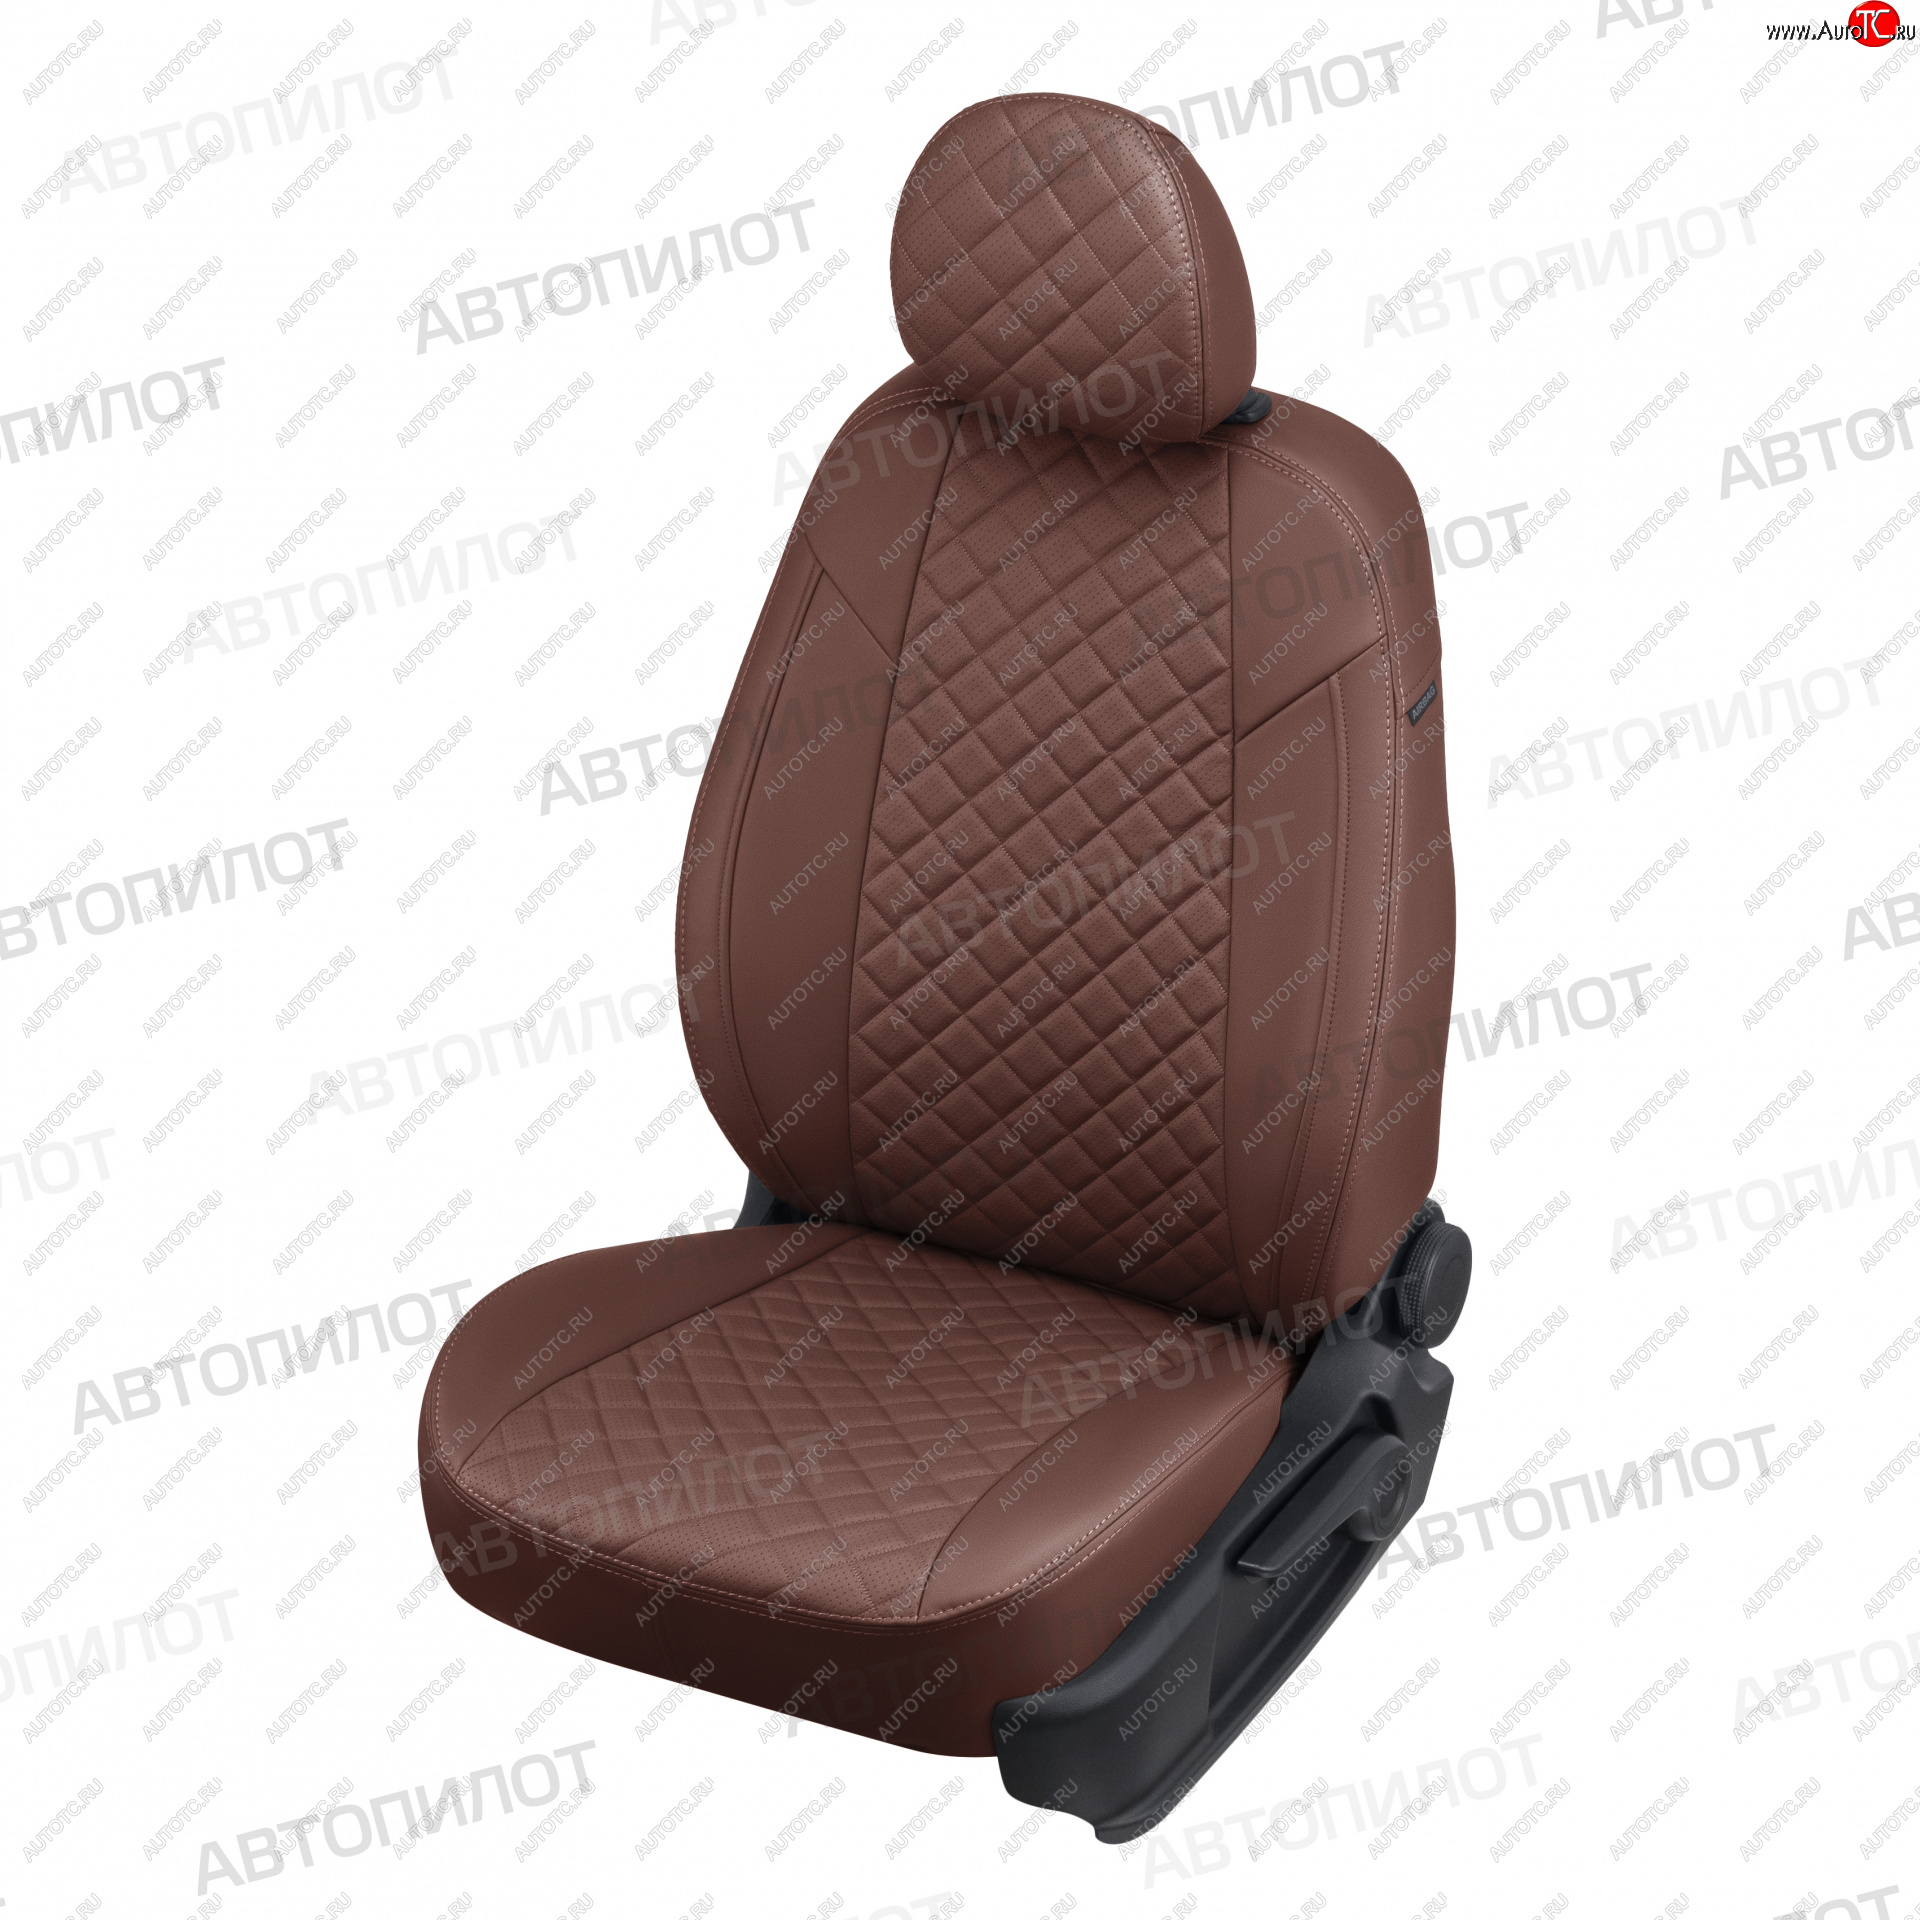 13 999 р. Чехлы сидений (экокожа) Автопилот Ромб  KIA Rio  1 DC (2000-2005) (темно-коричневый)